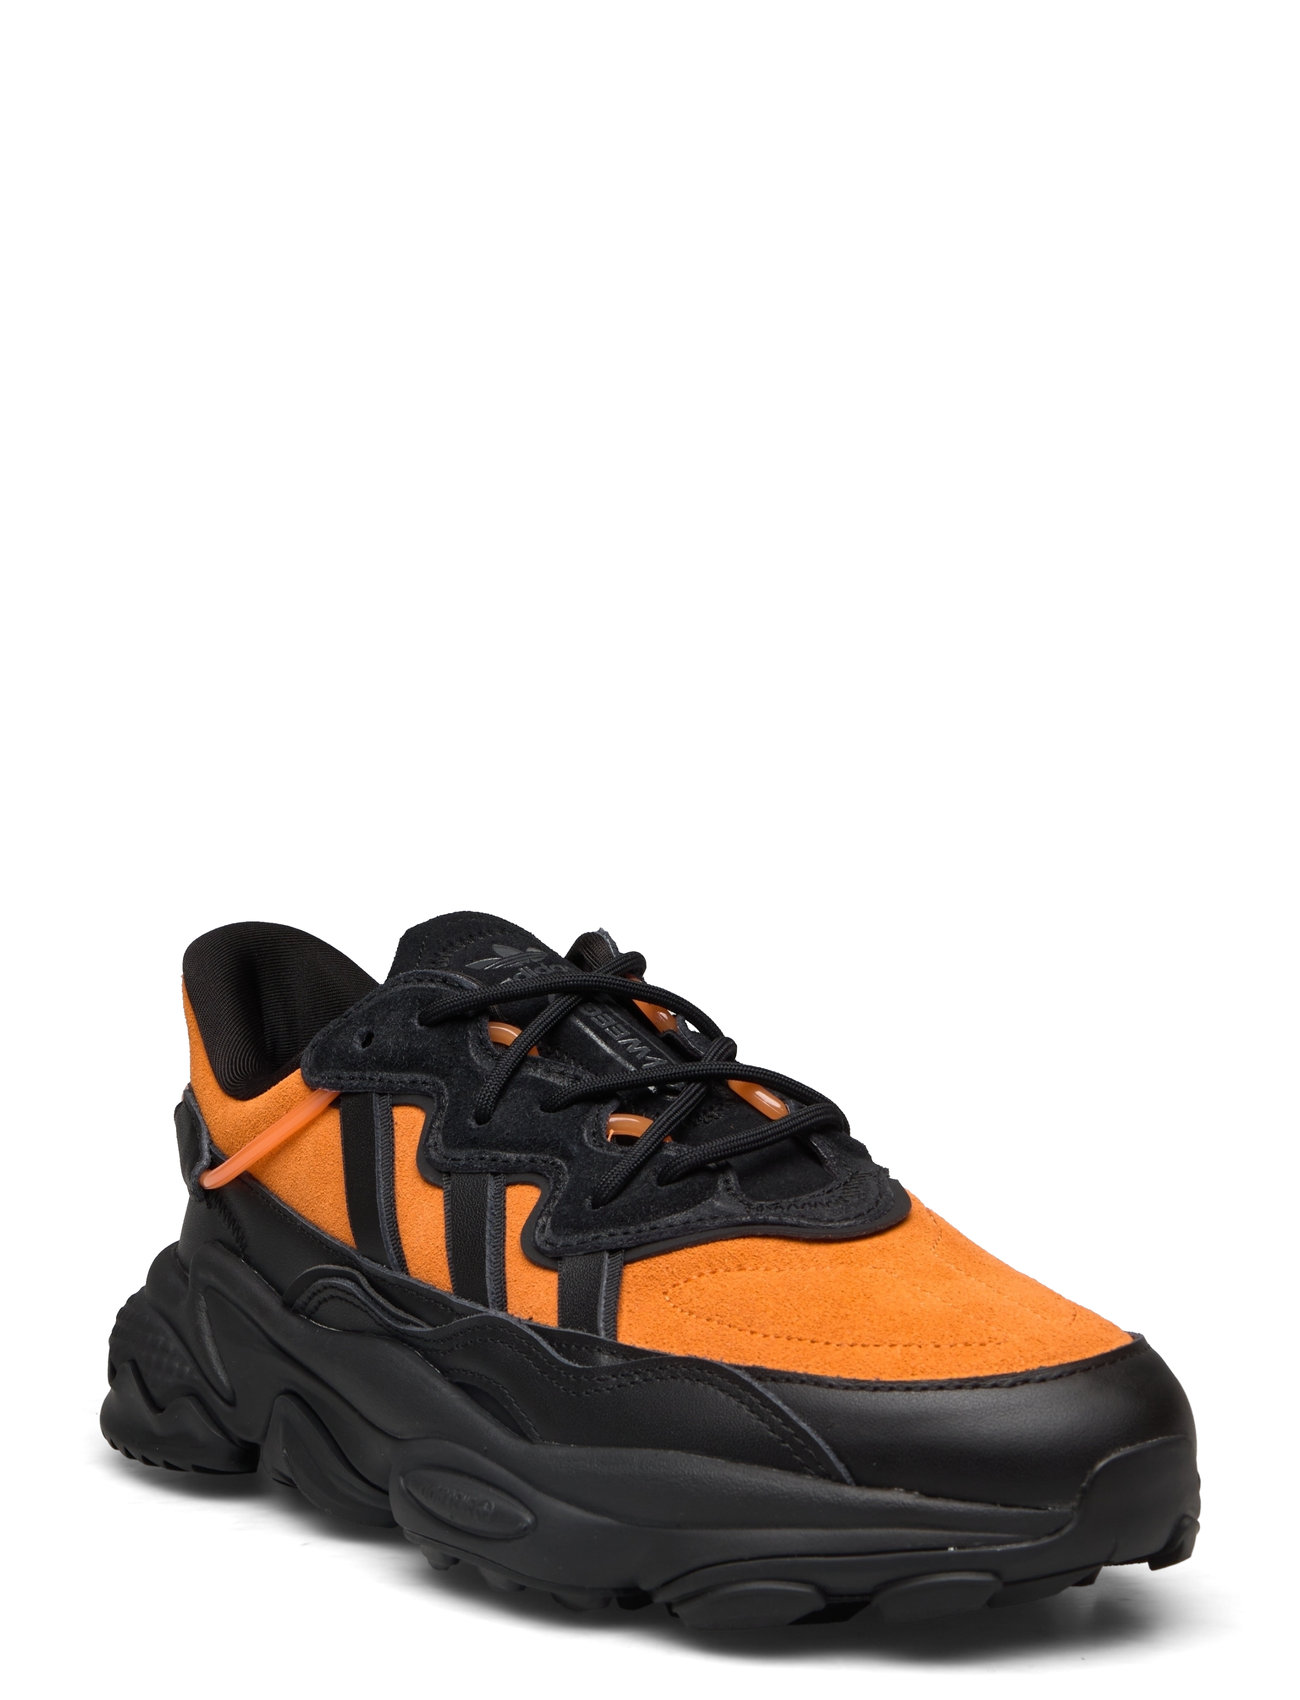 Ozweego Shoes Low-top Sneakers Orange Adidas Originals